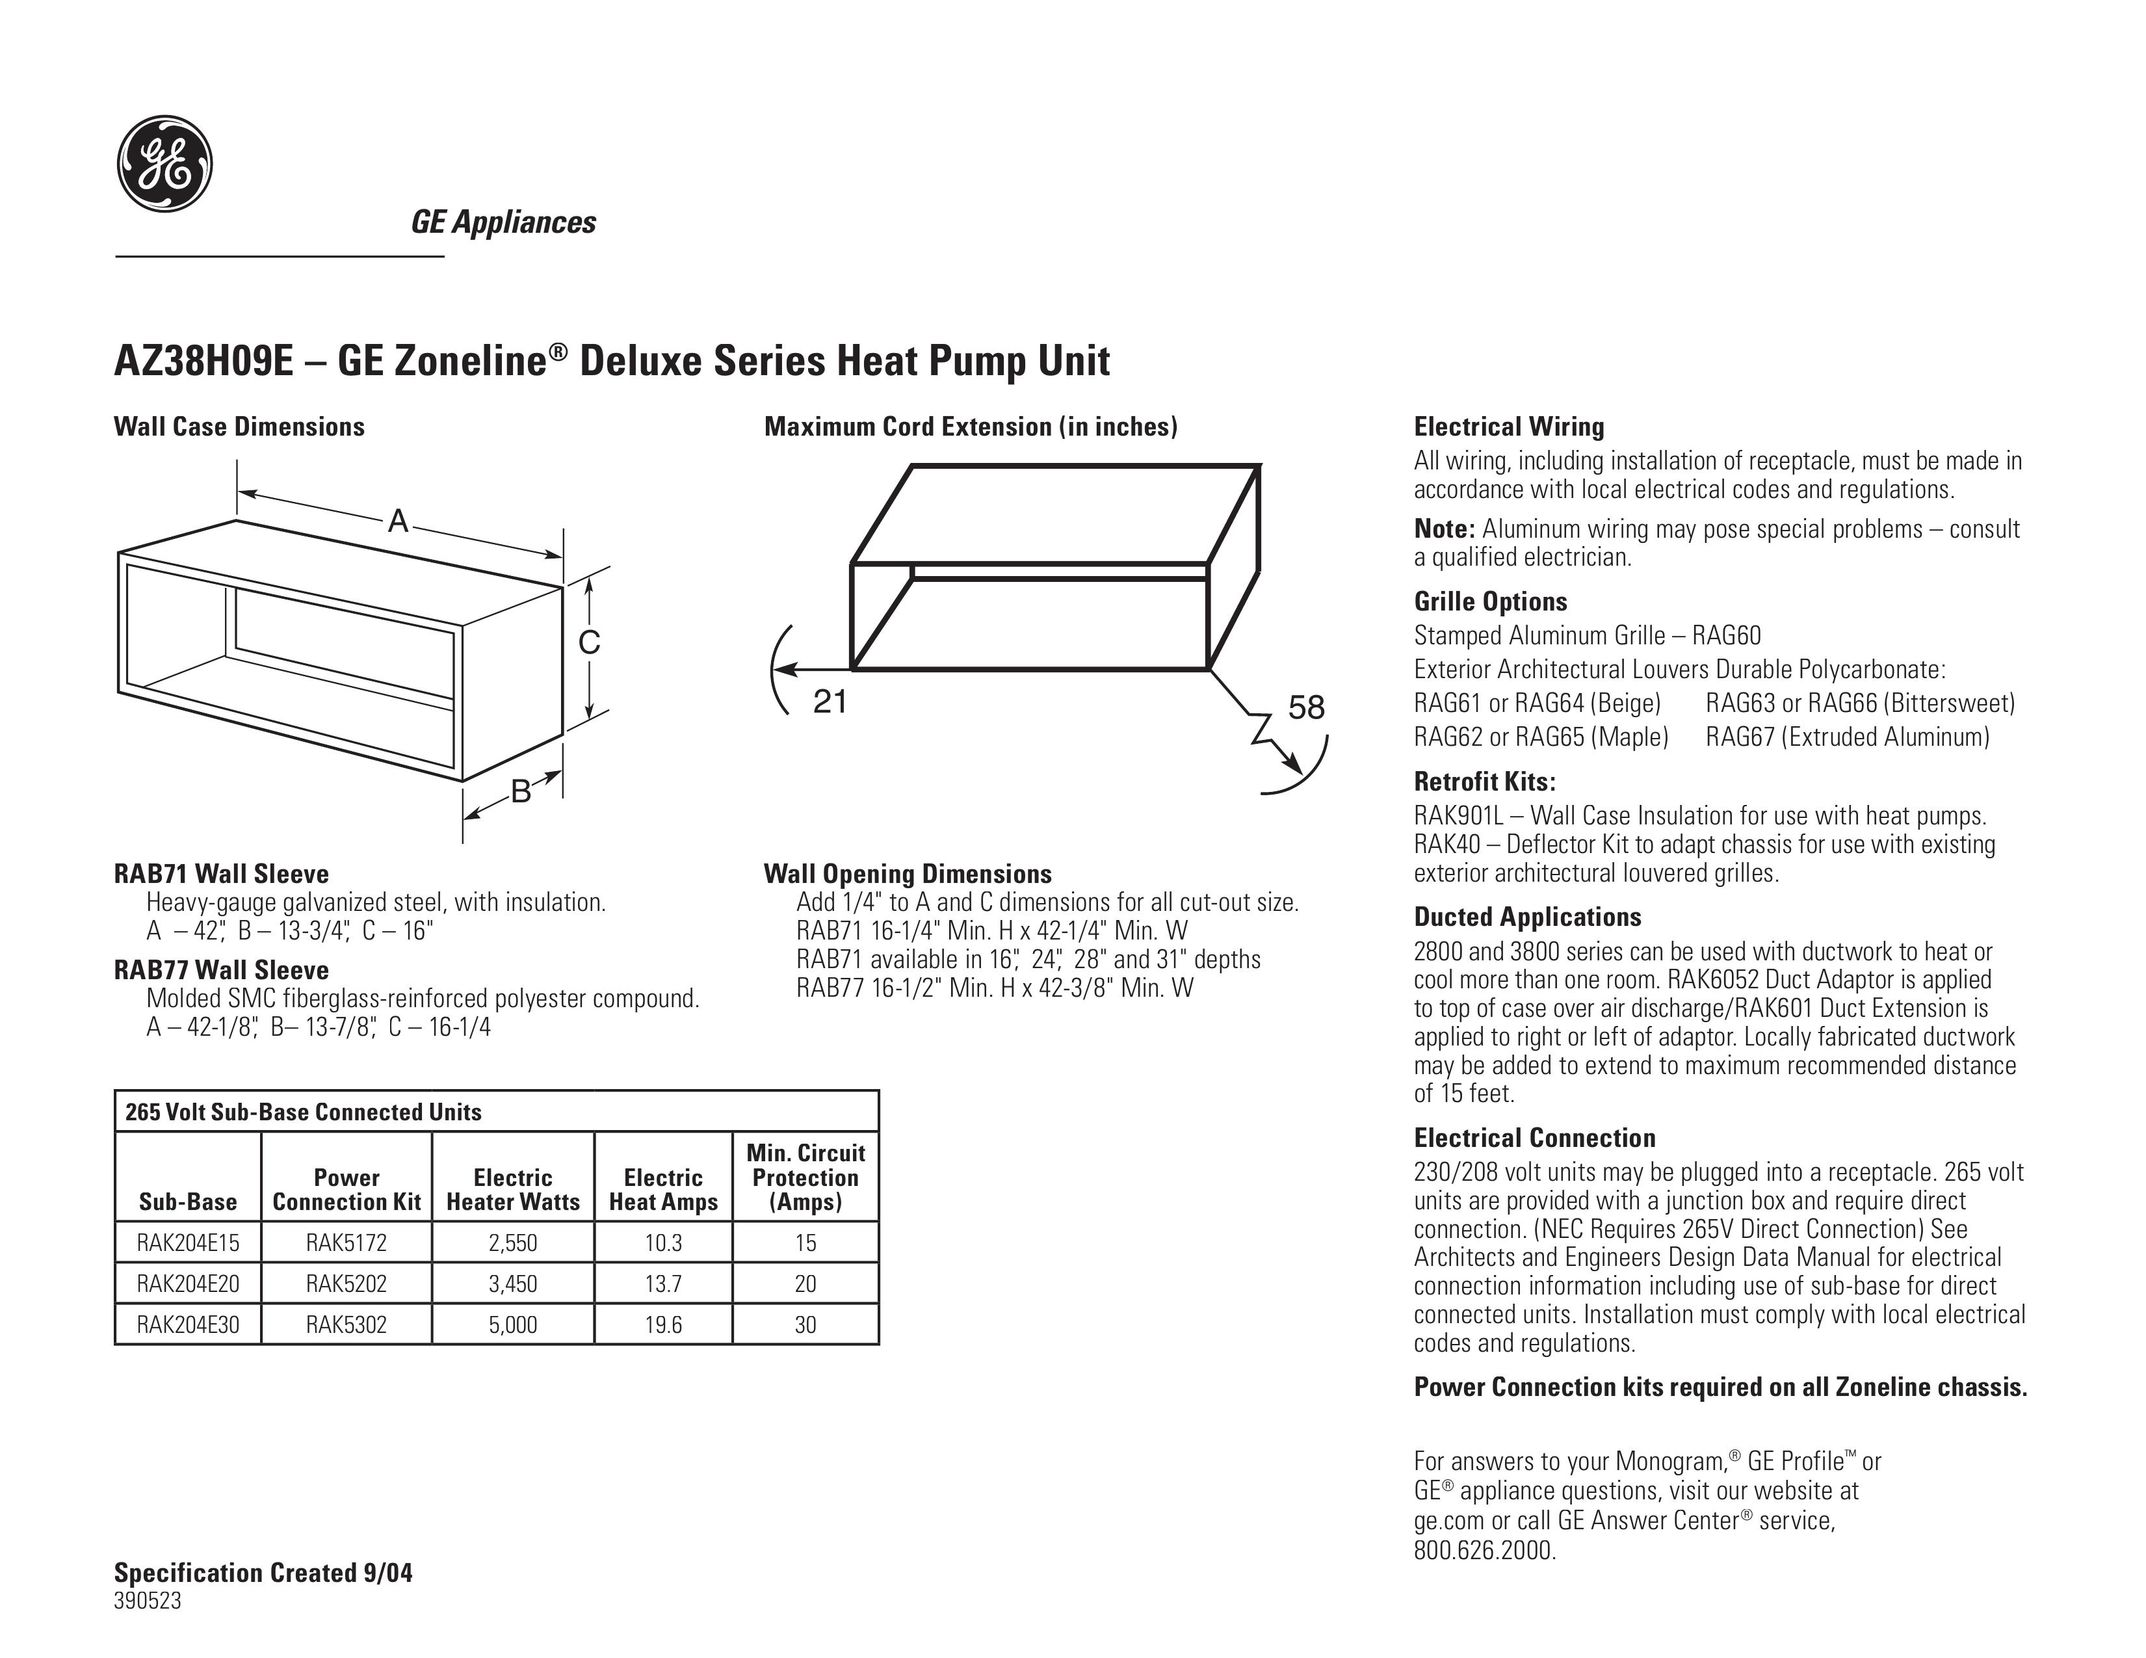 GE AZ38H09EAD Heat Pump User Manual